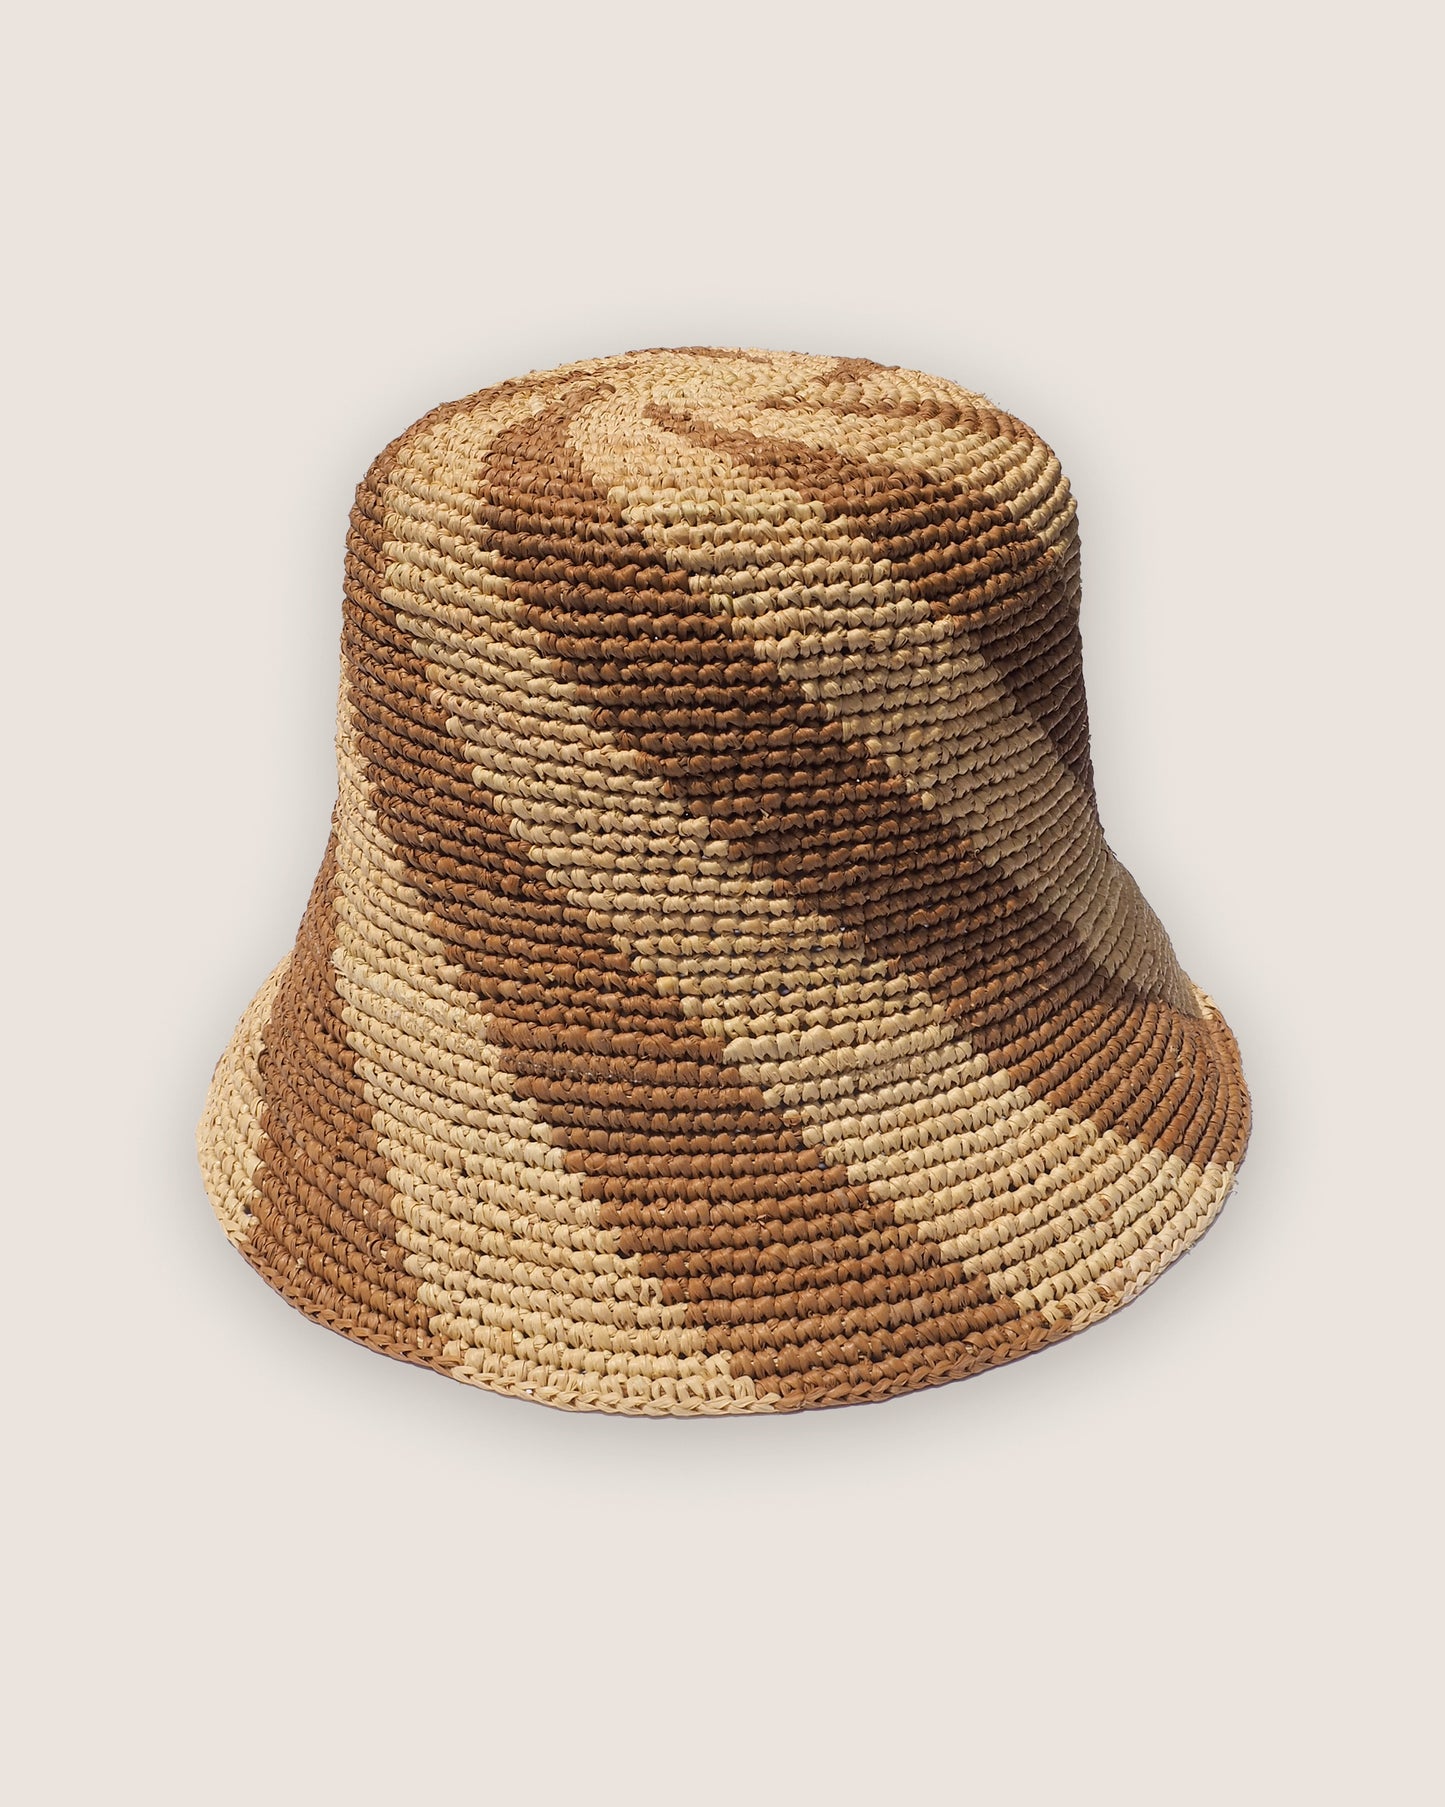 Jace Banu Cyra Bucket Hat - Bronze & Natural Spiral